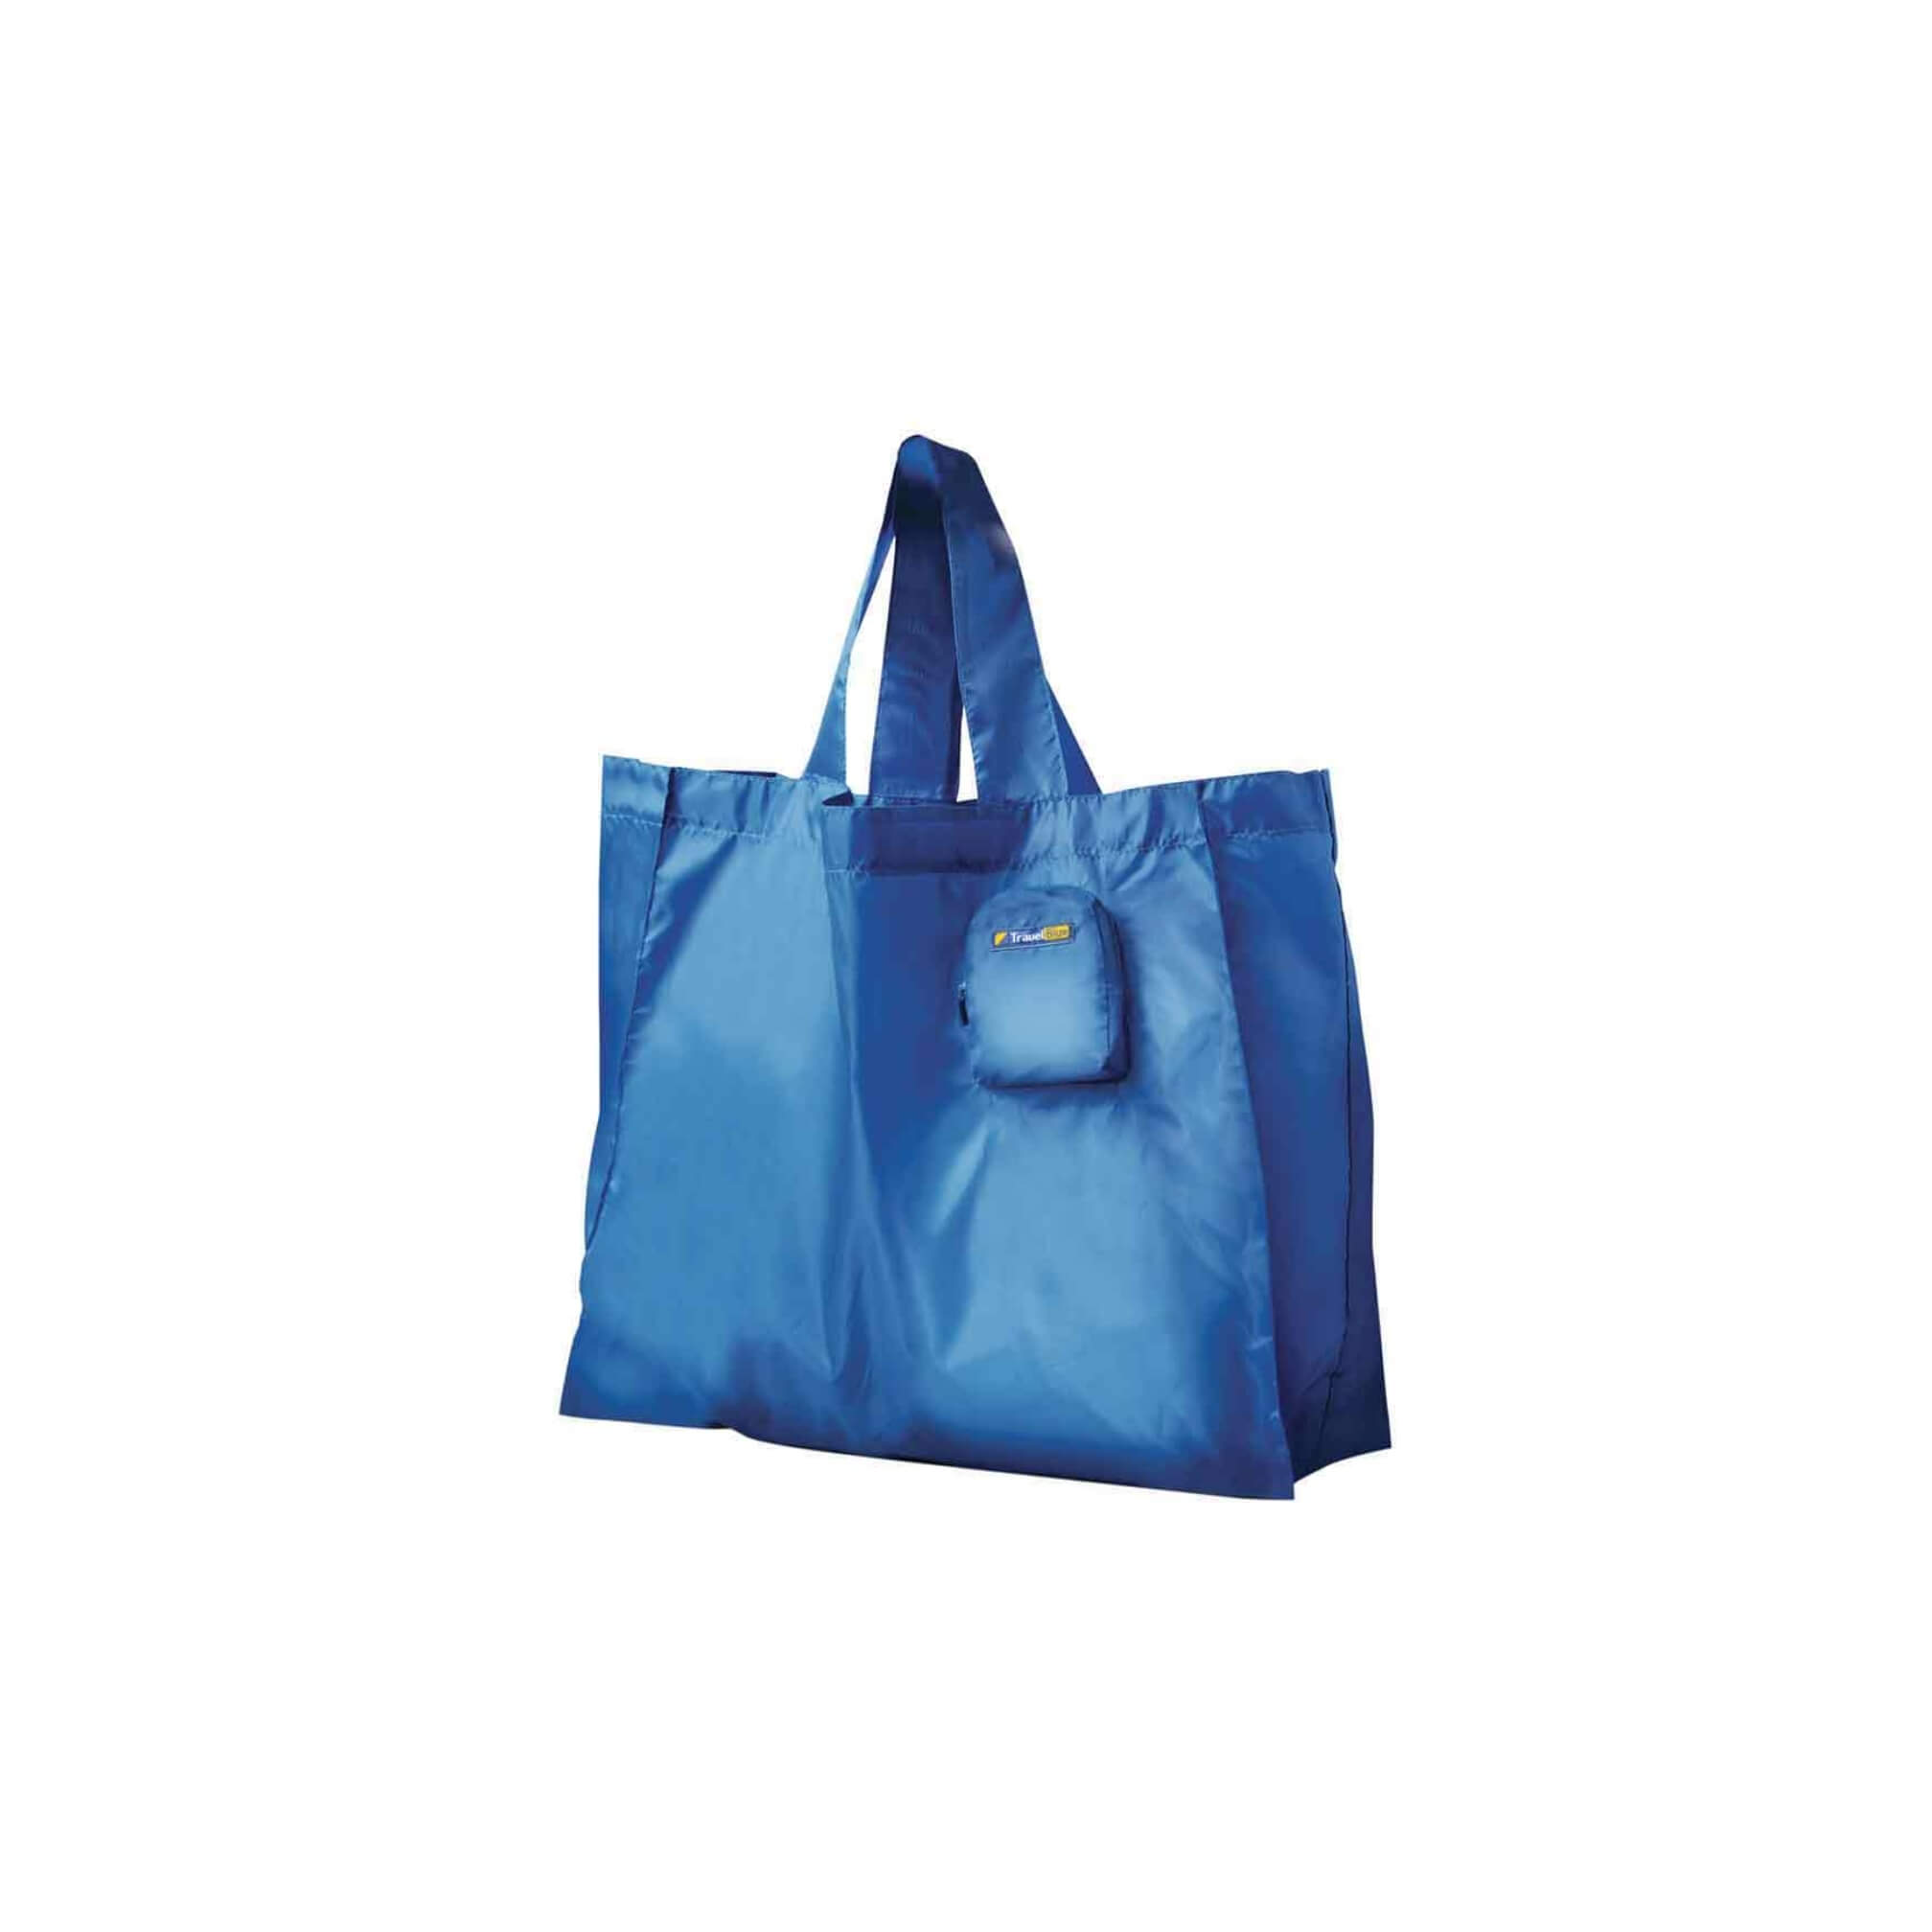 Travel Blue продукция. Gavrik PH сумки. Legend Blue городская мини сумка. Travel Blue Шанхай. Travel blue